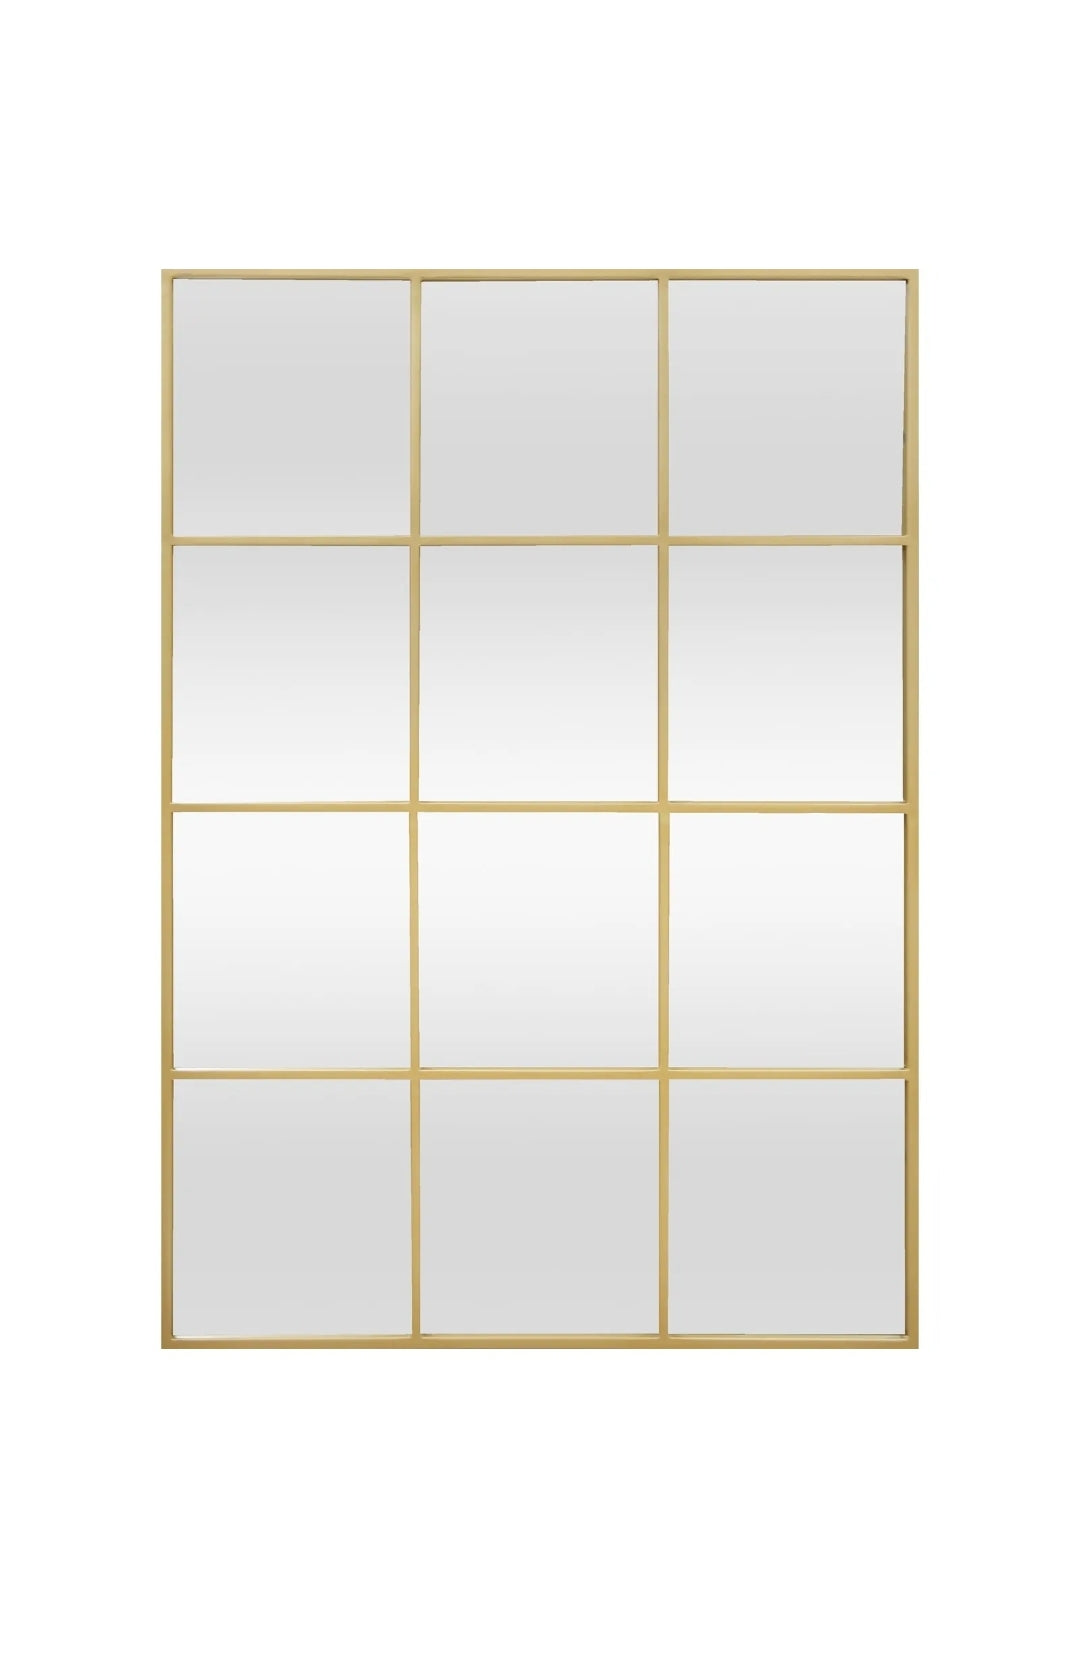 Gold Industrial Window Panelled Mirror 90 x 60cm